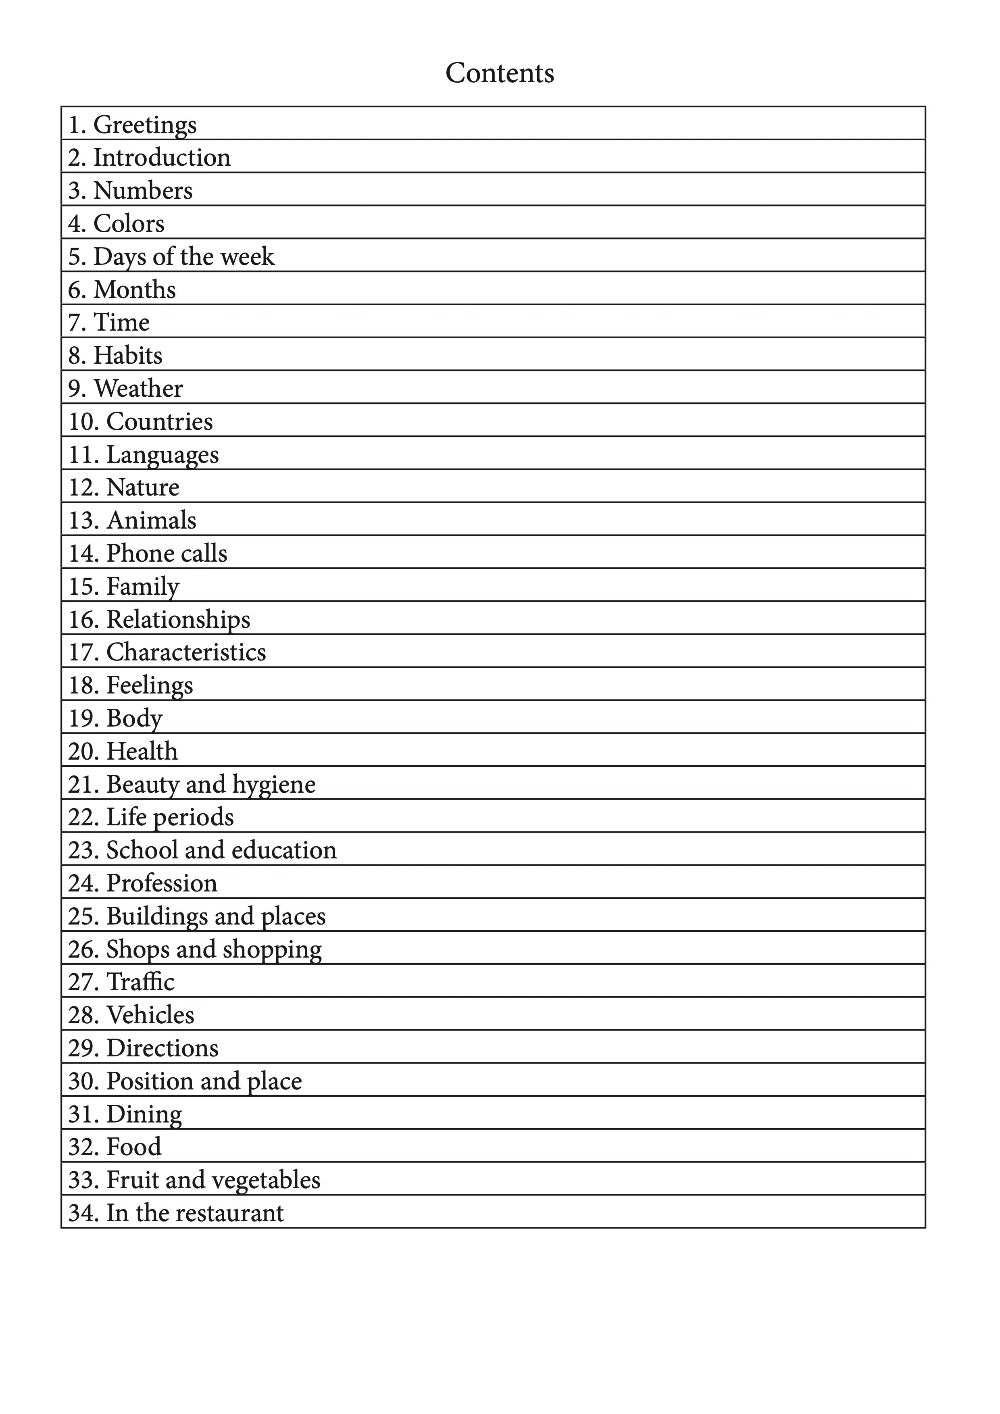 Limbu language learning notebook contents page 1